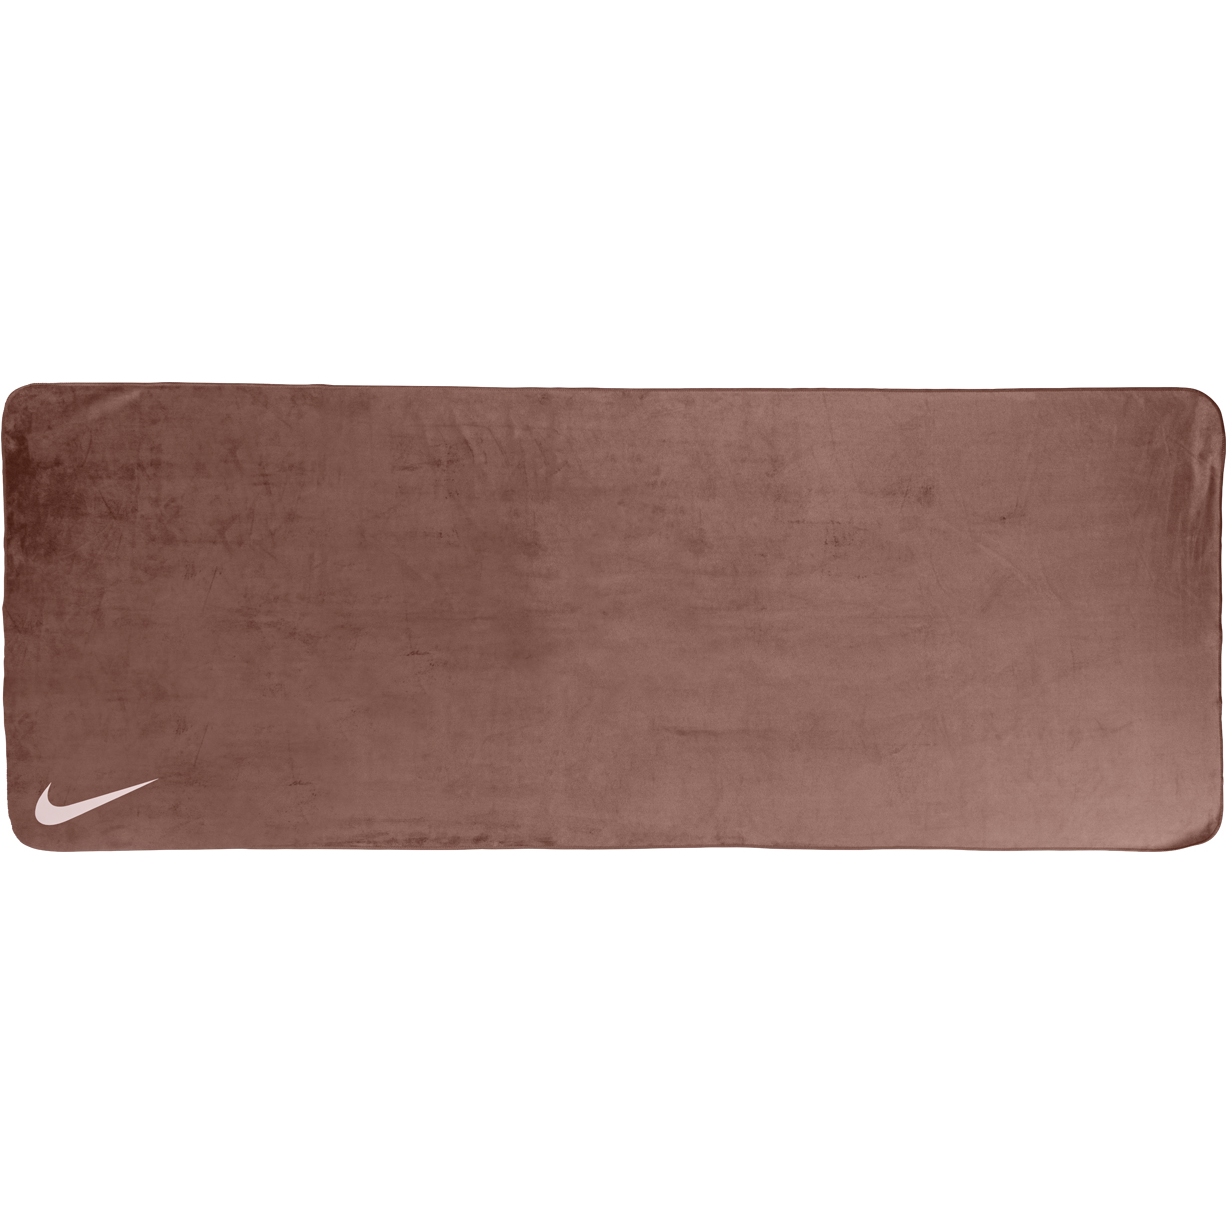 Productfoto van Nike Yoga Handdoek - smokey mauve/platinum violet 201